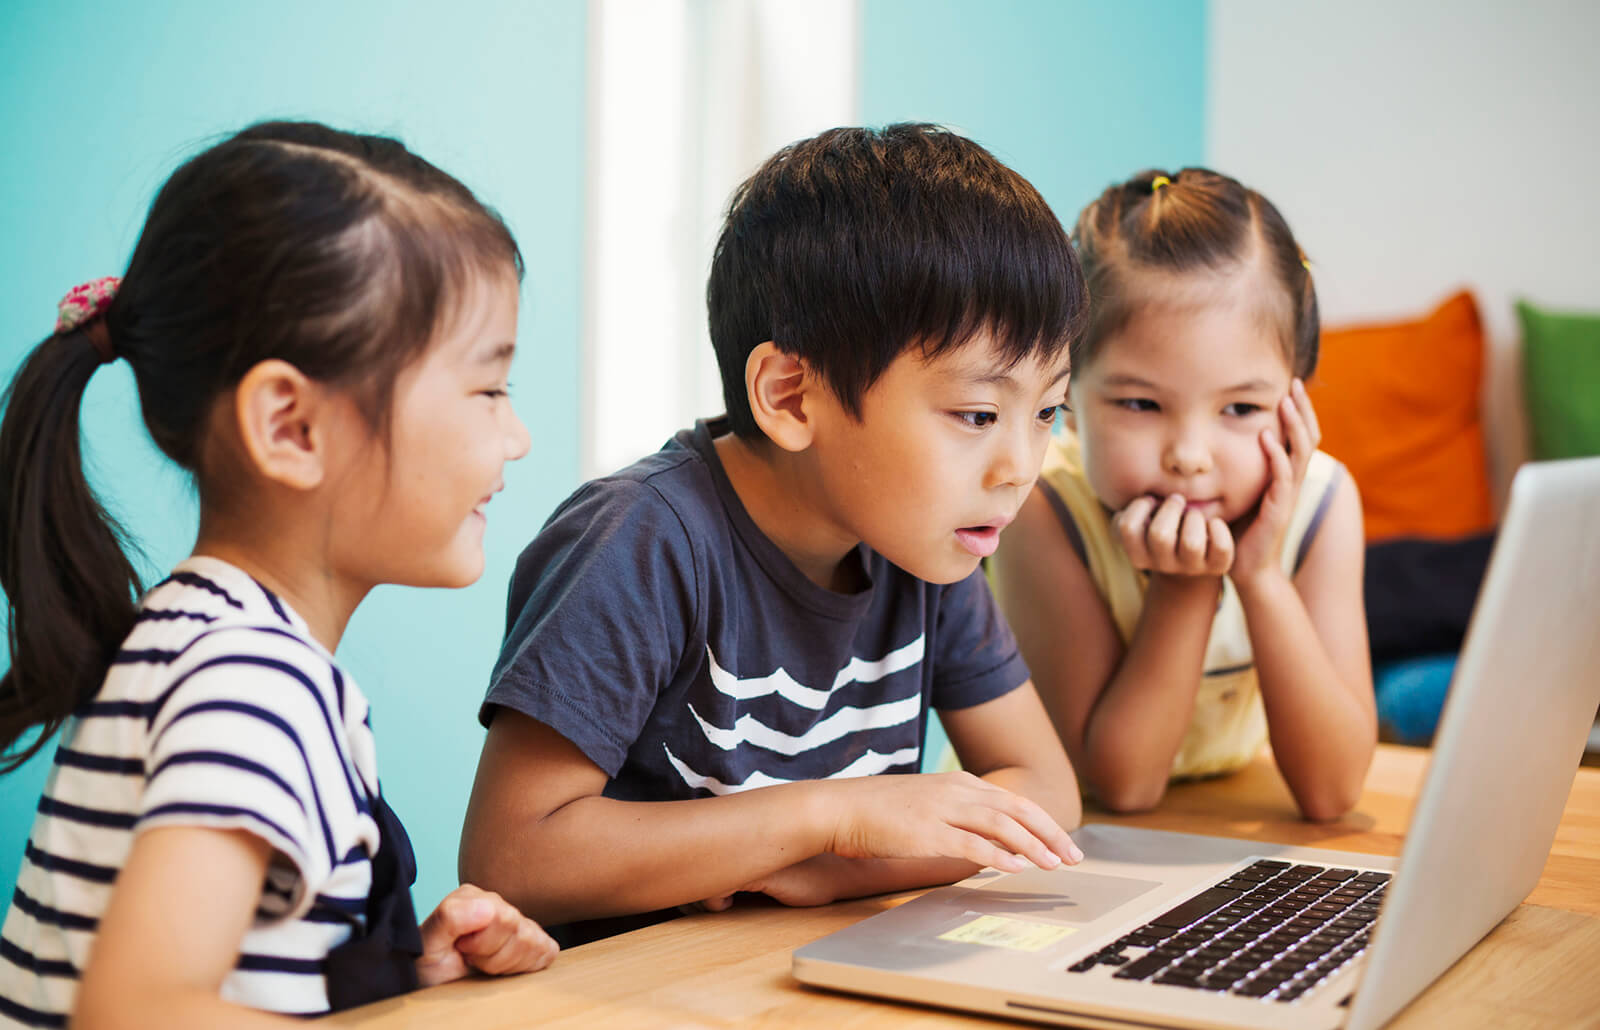  Introducing Kids to Basic Computer Skills